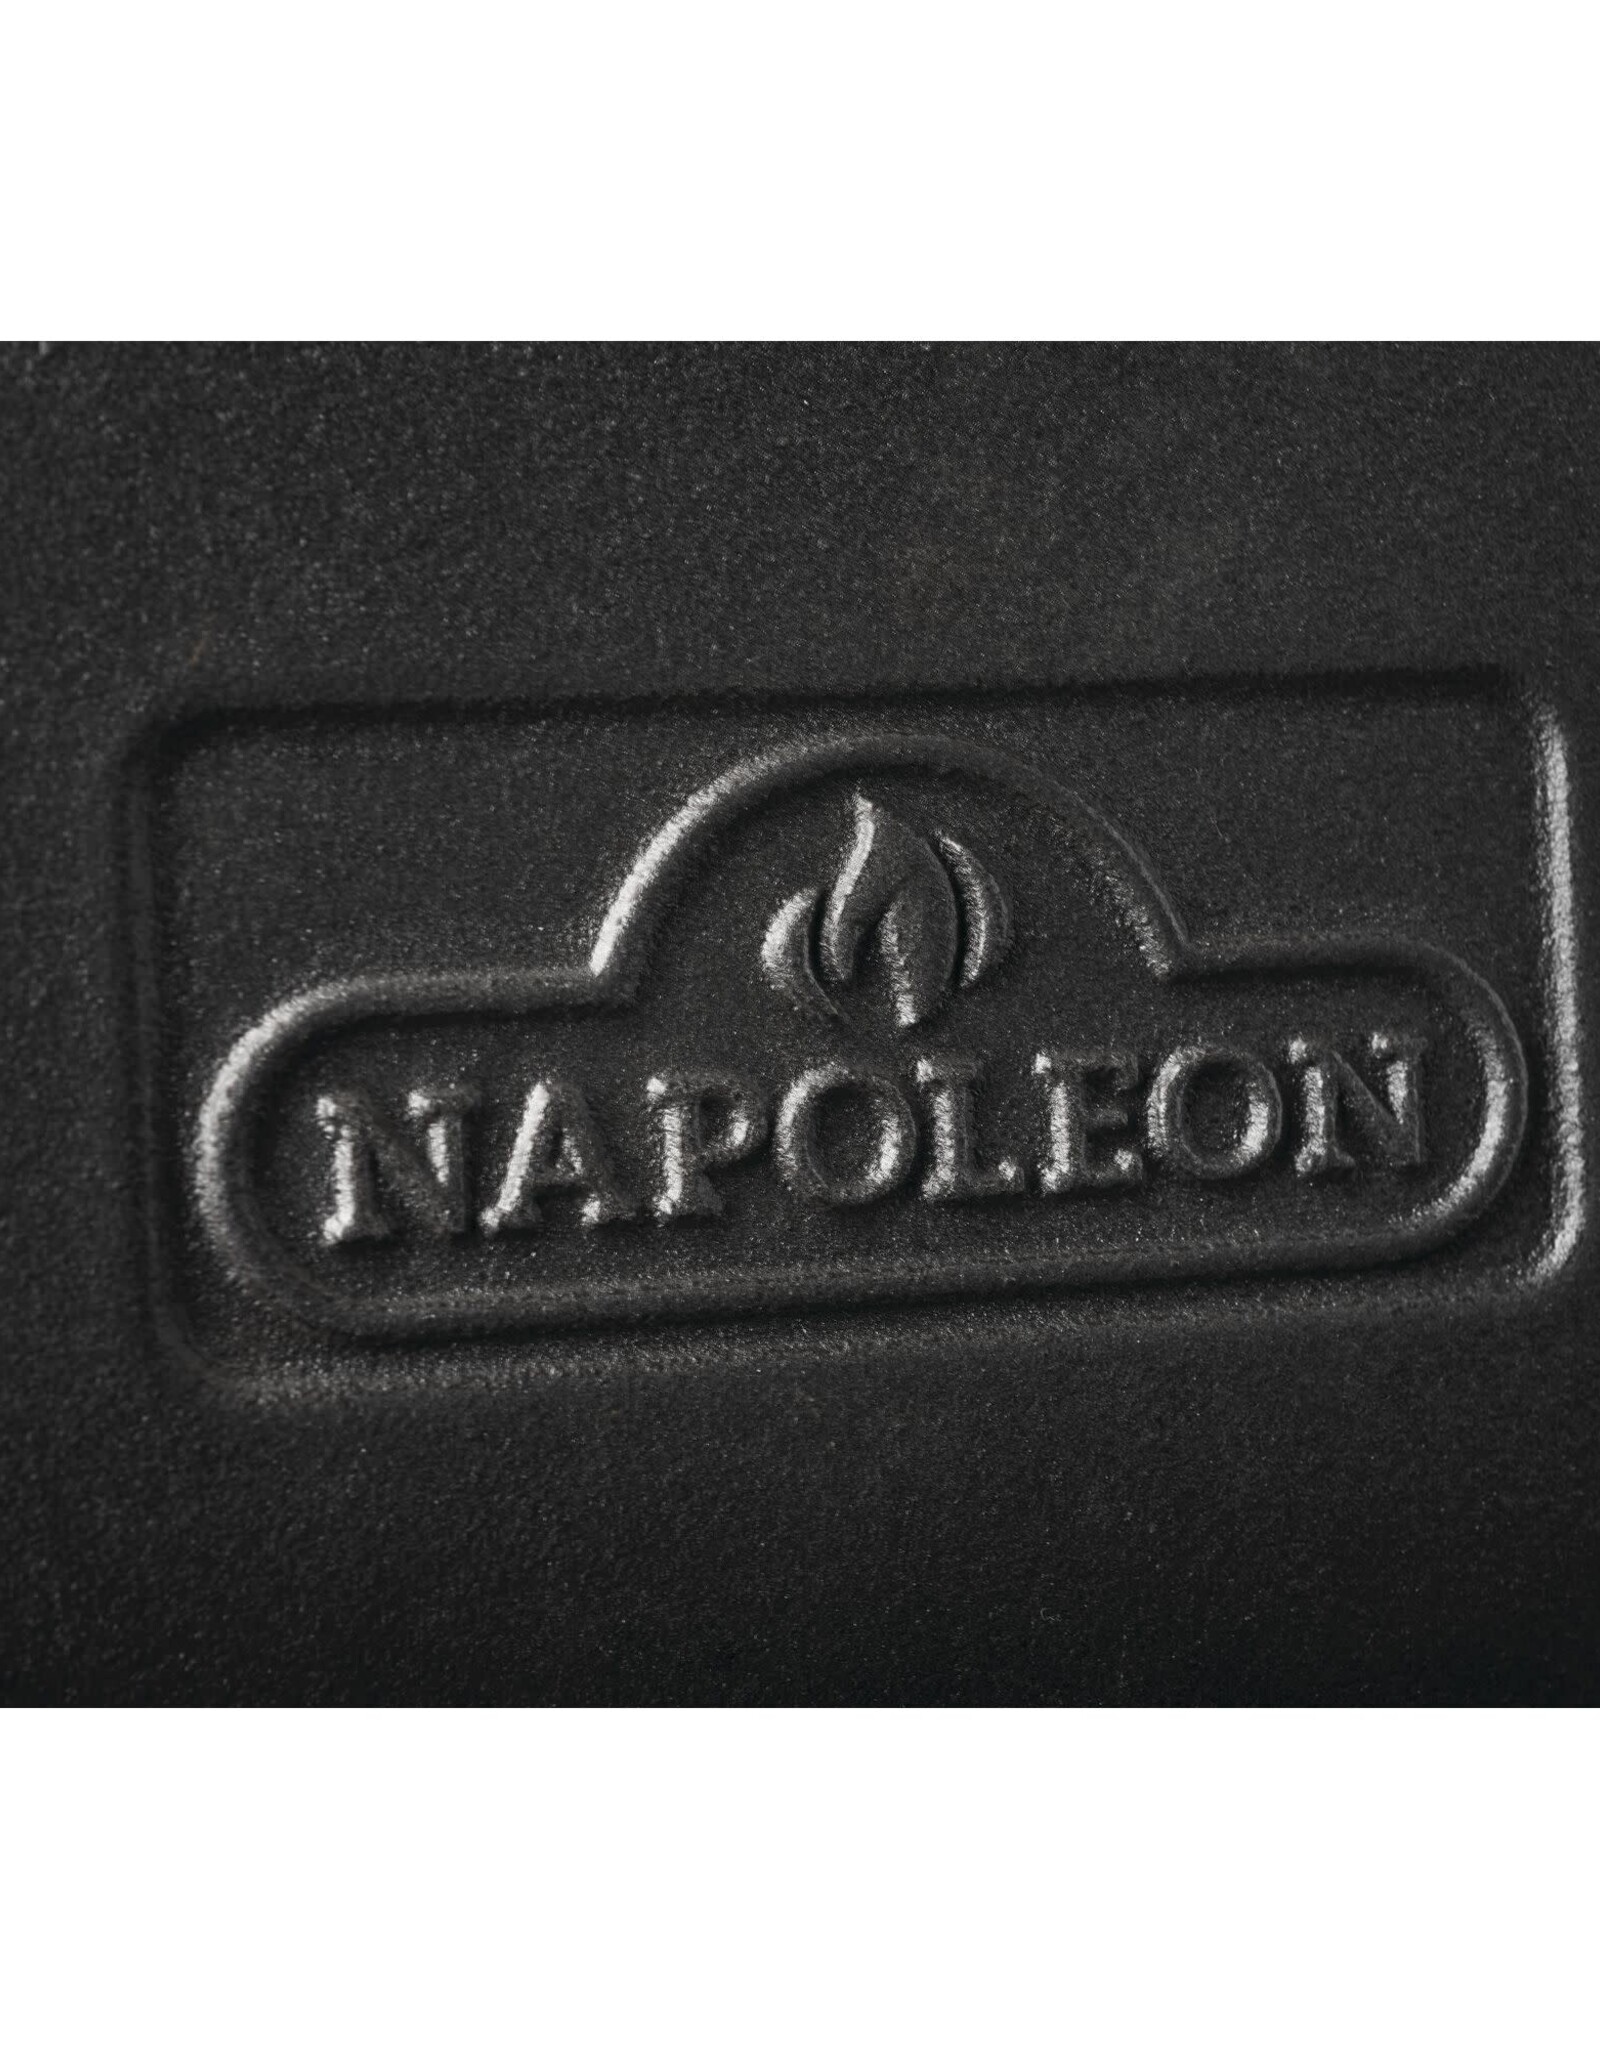 Napoleon Napoleon Cast Iron Frying Pan - 56053